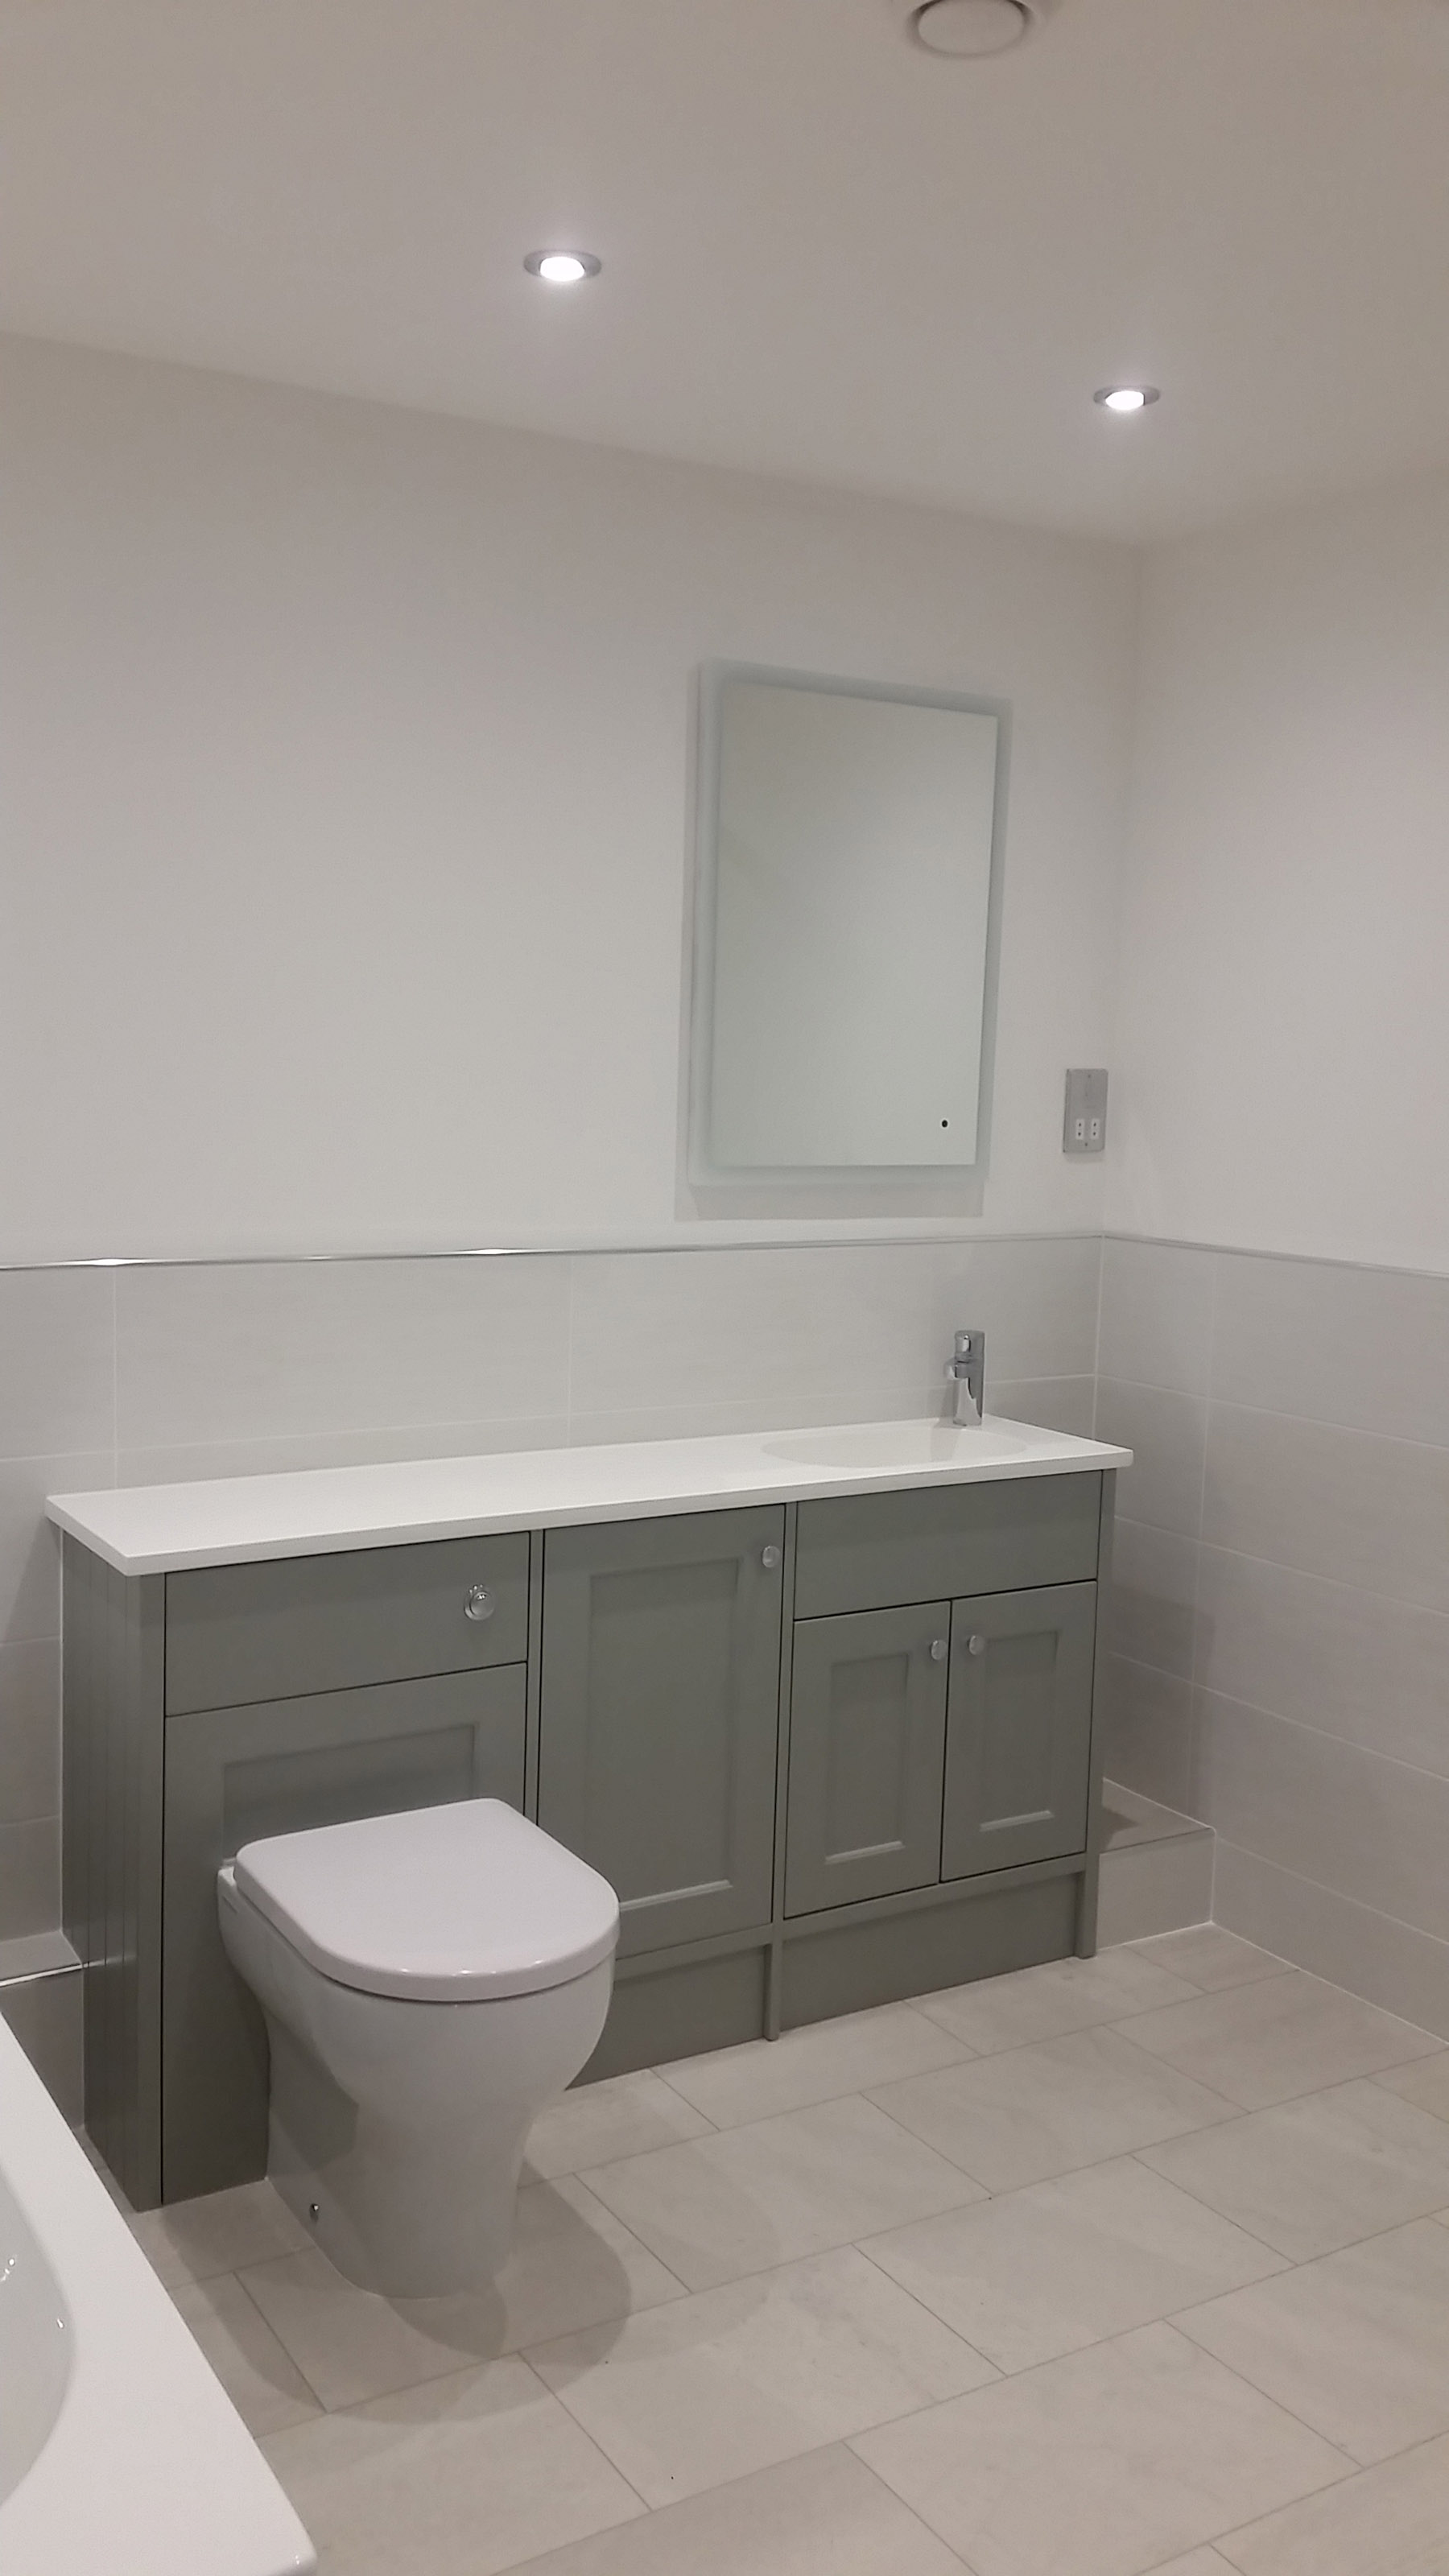 Grey and white bathroom